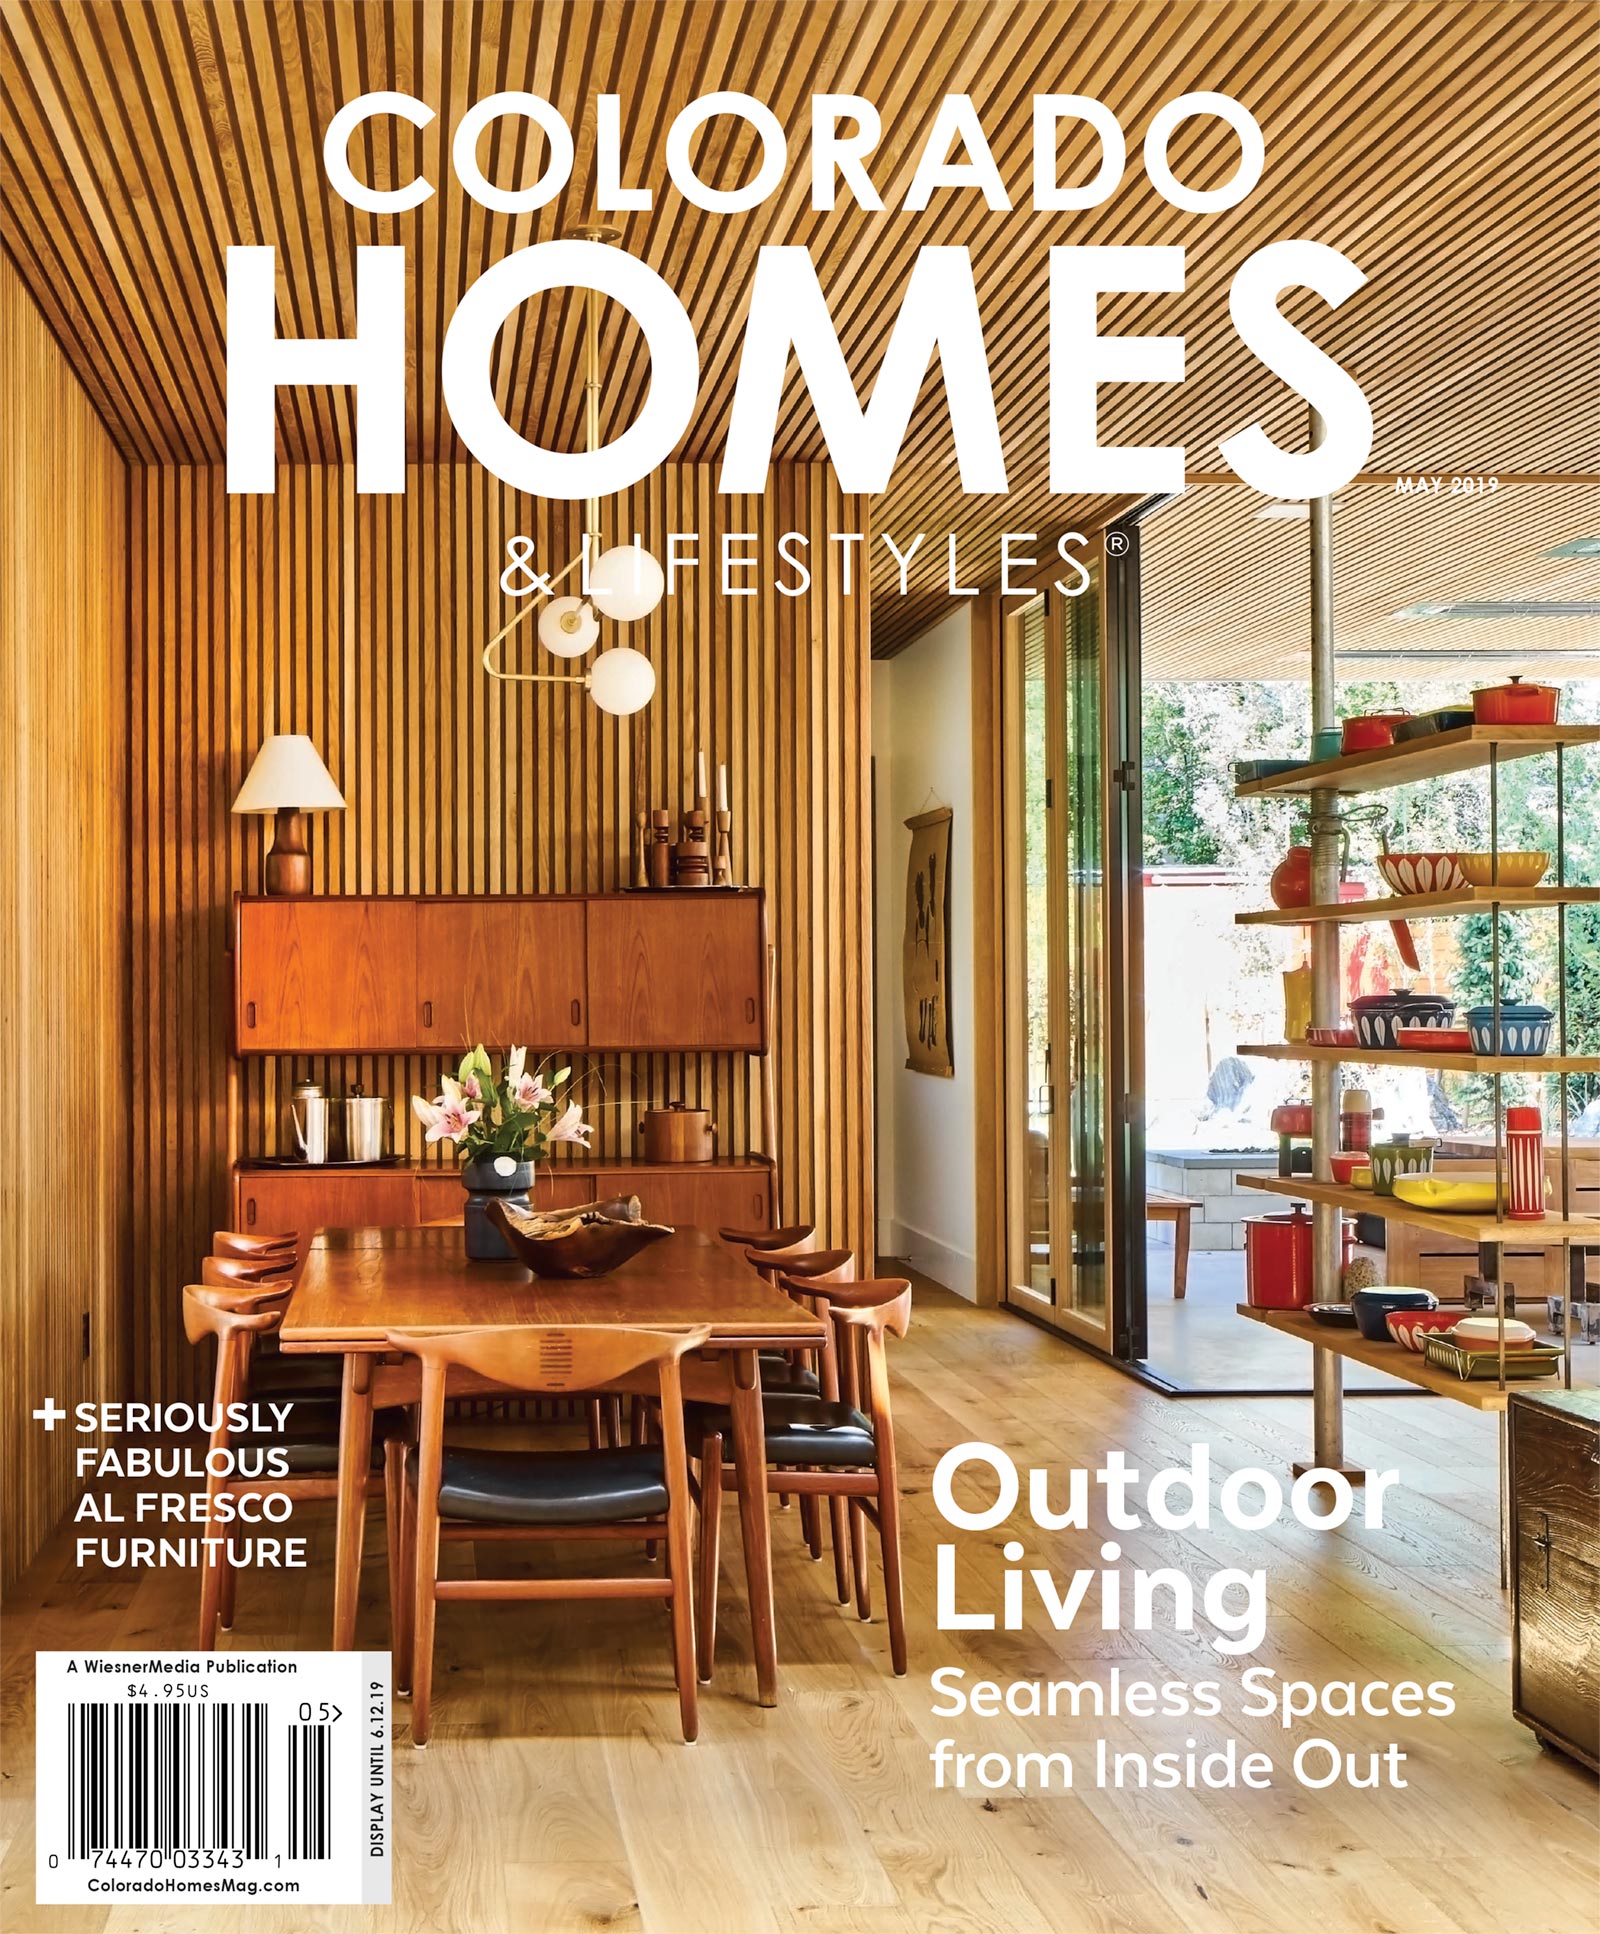 Colorado Homes and Lifestyles  Magazine David Patterson Photography of Interior Design Architecture  Boulder Colorado